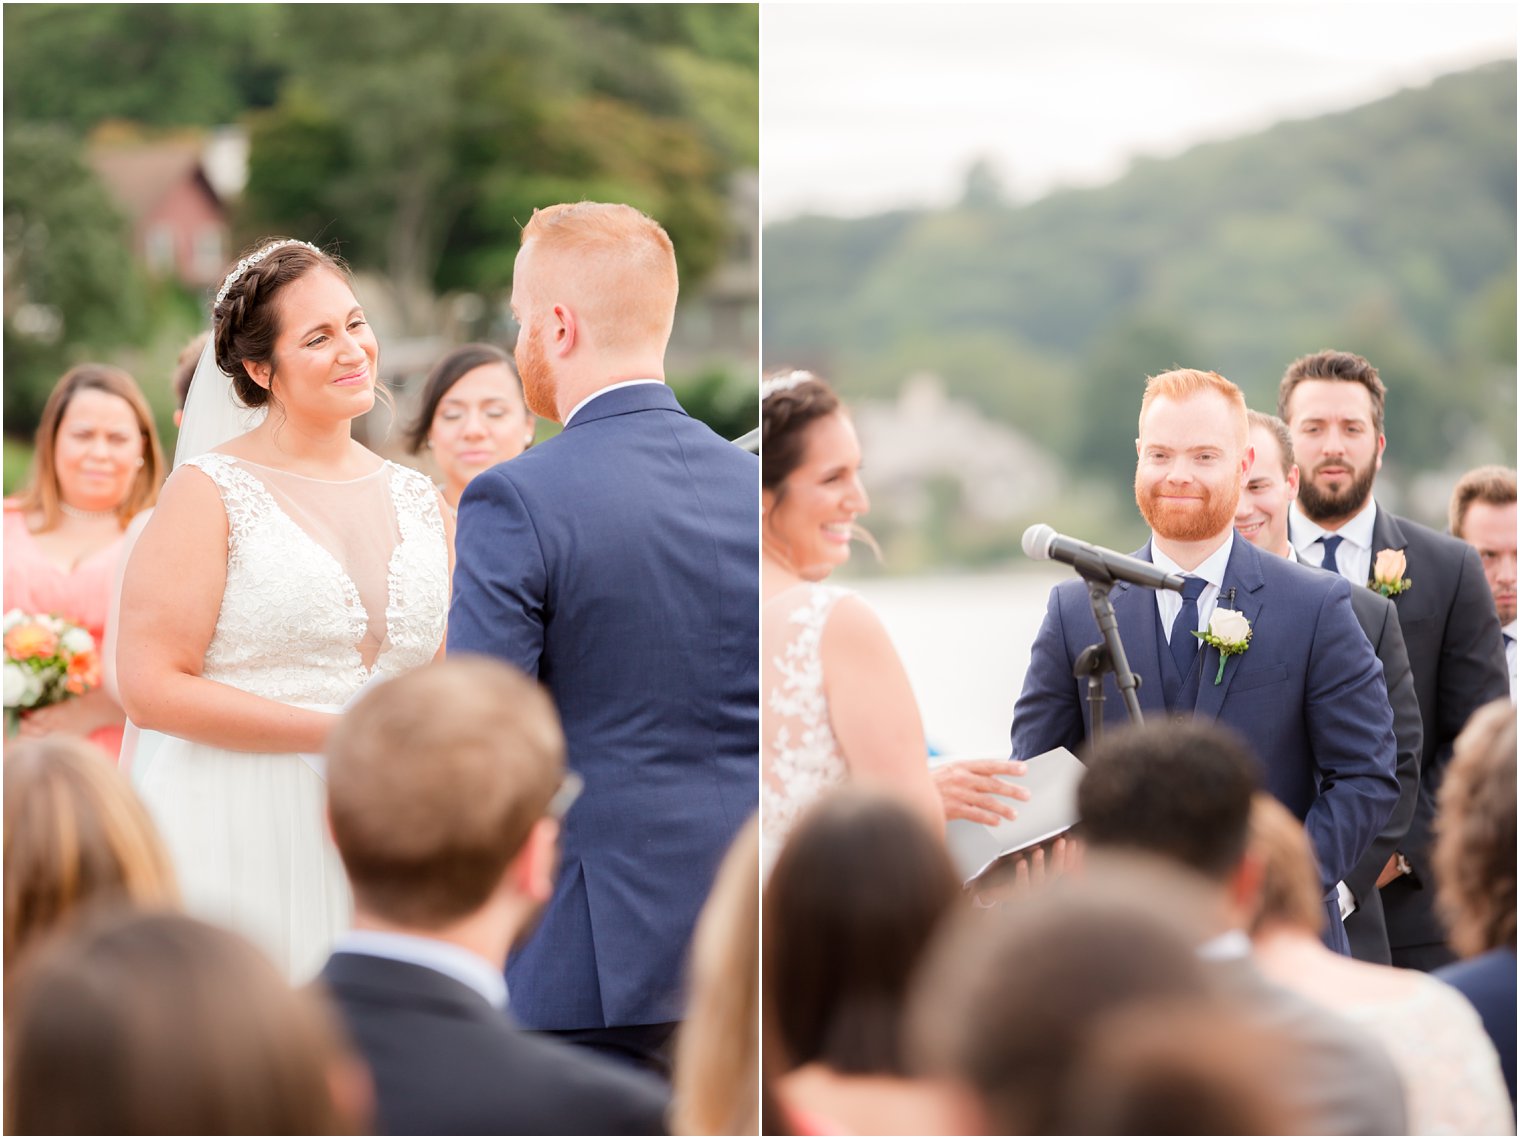 emotional wedding ceremony at Lake Mohawk Country Club photographed by Idalia Photography